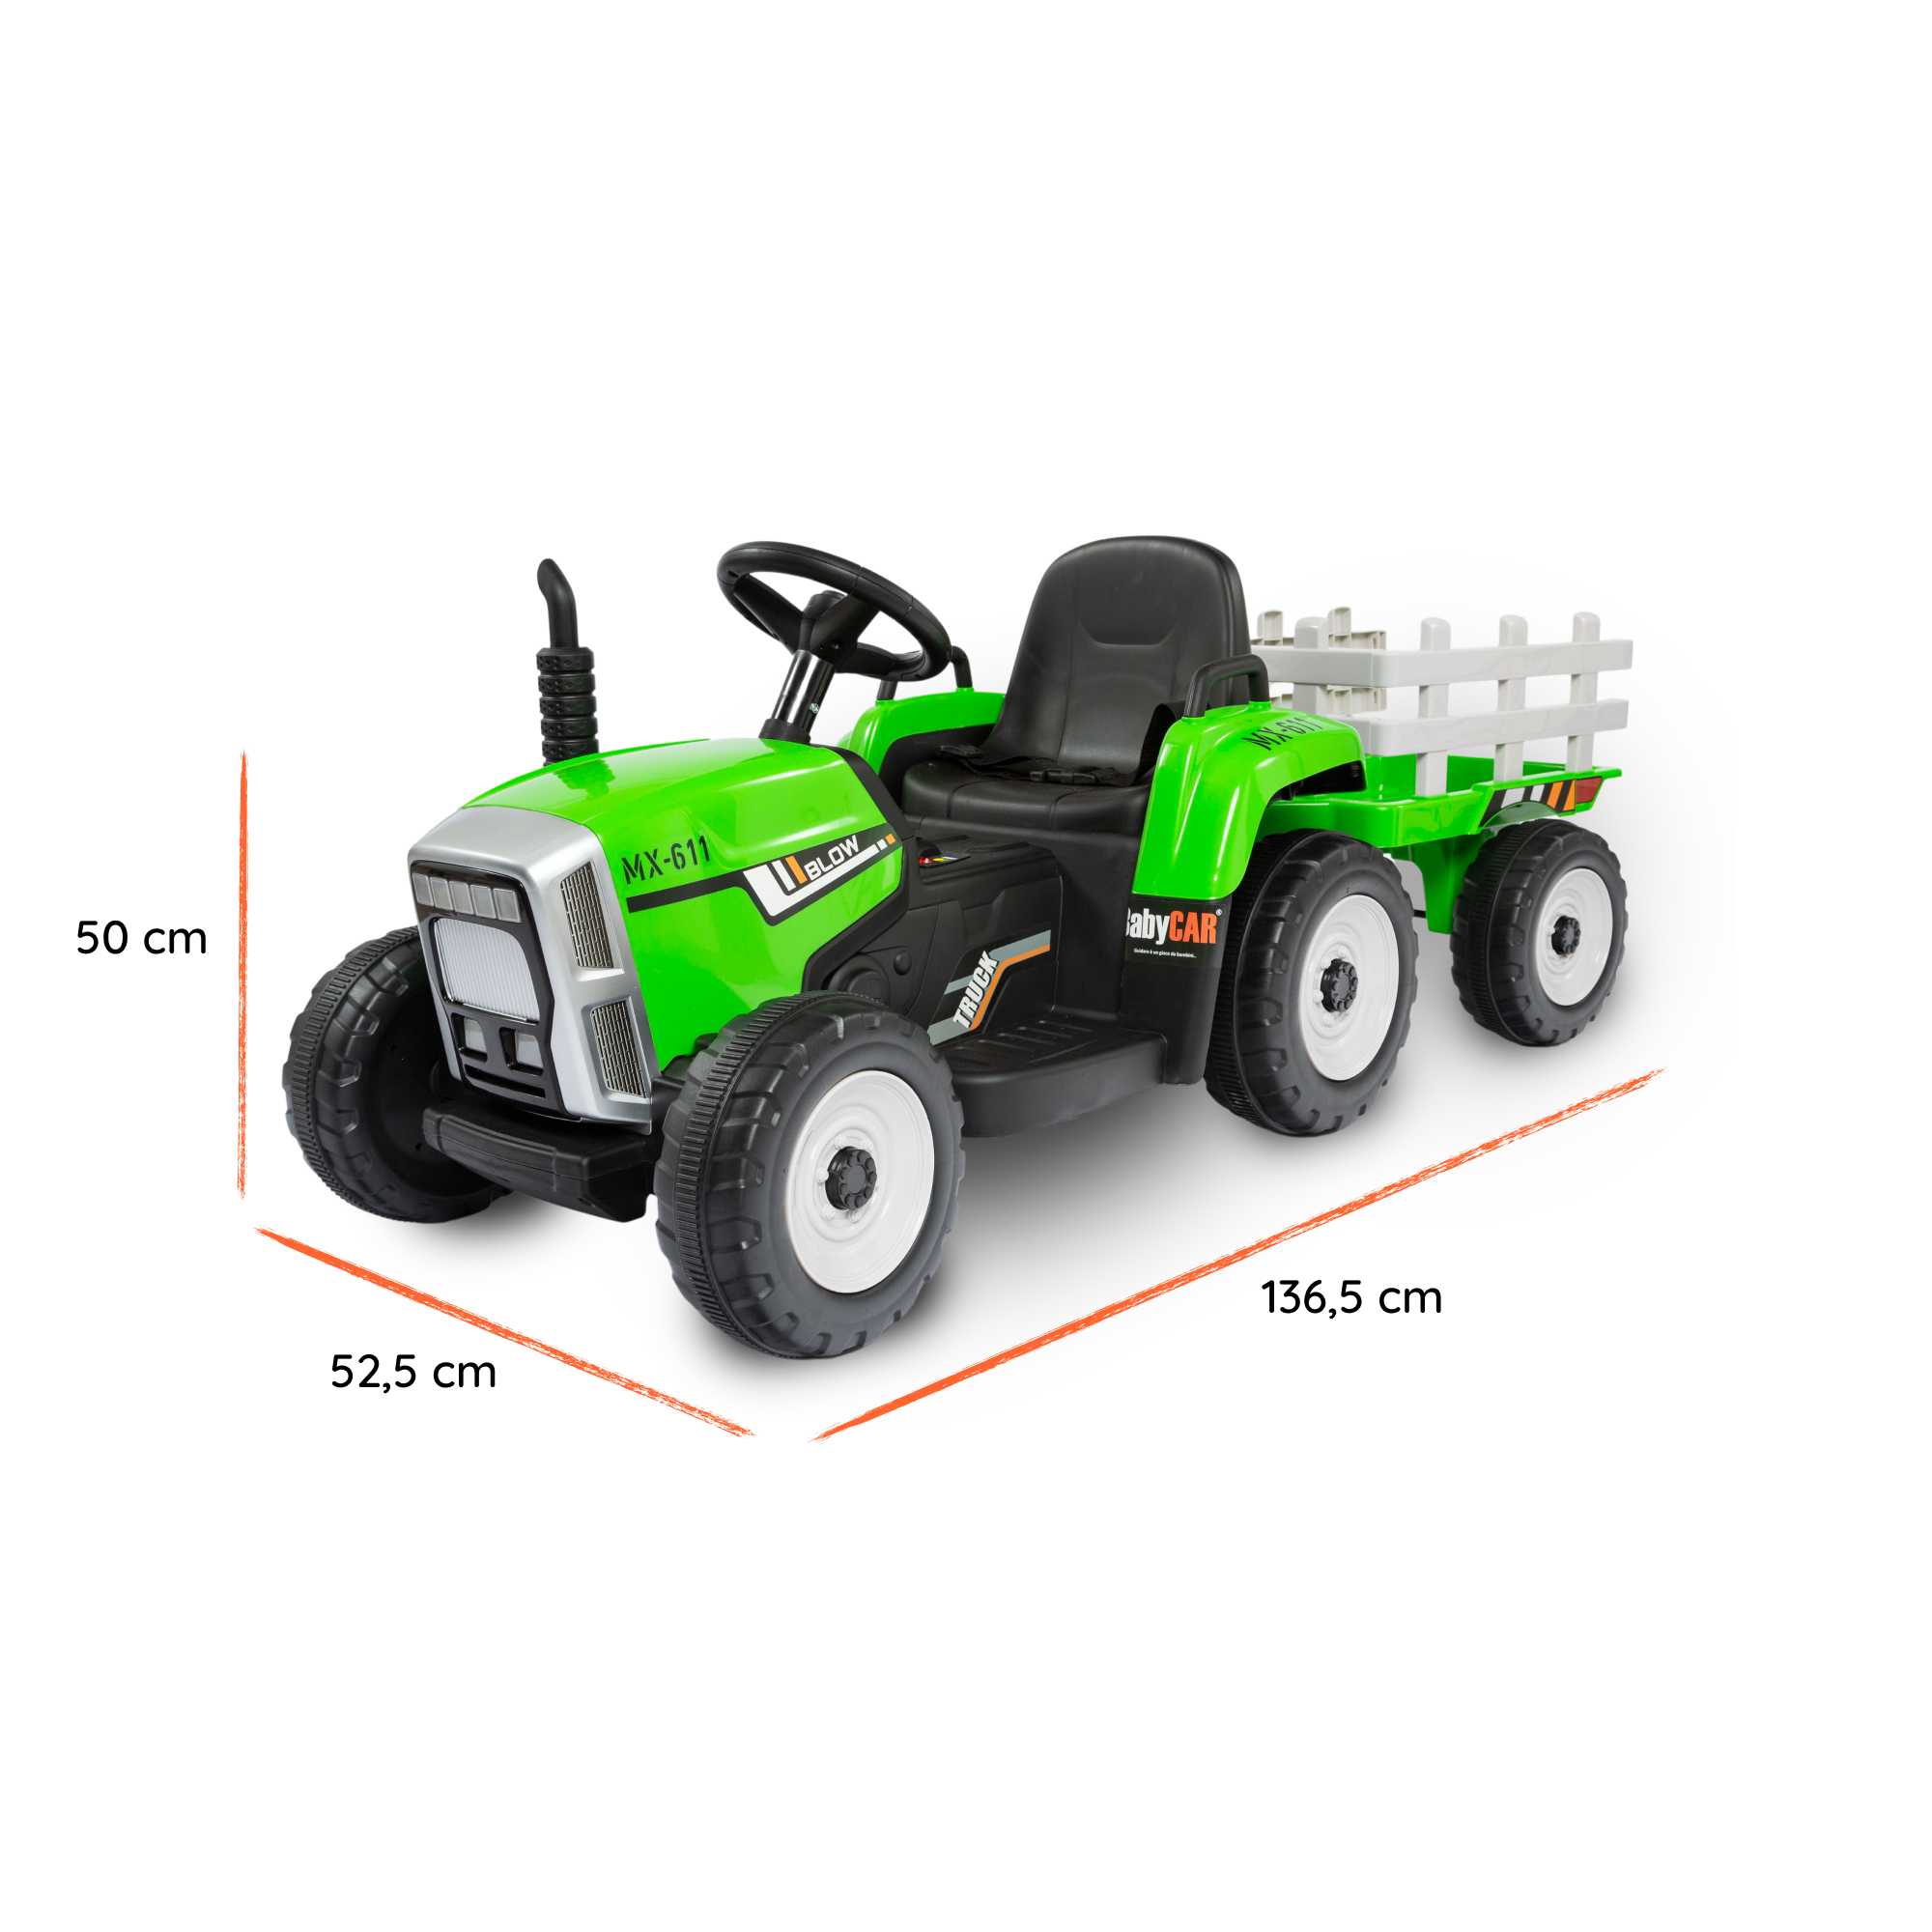 Tracteur electrique avec remorque vert dimensions 